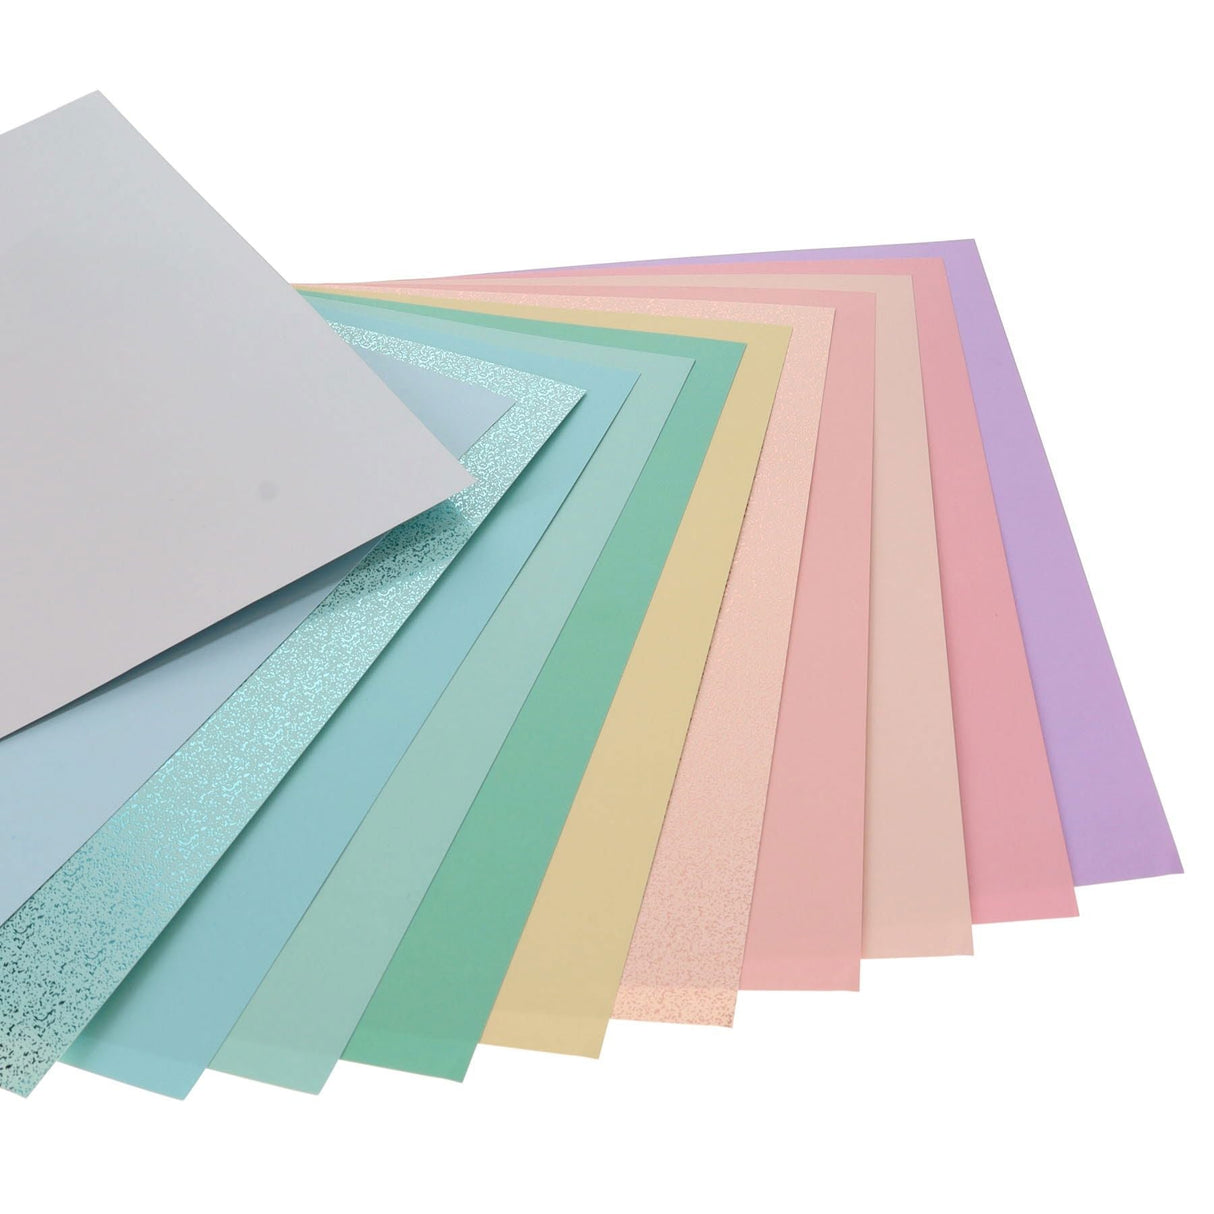 Premier Activity A4 Paper Pad - 22 Sheets - 180gsm - Shades of Pastels-Craft Paper & Card-Premier|StationeryShop.co.uk